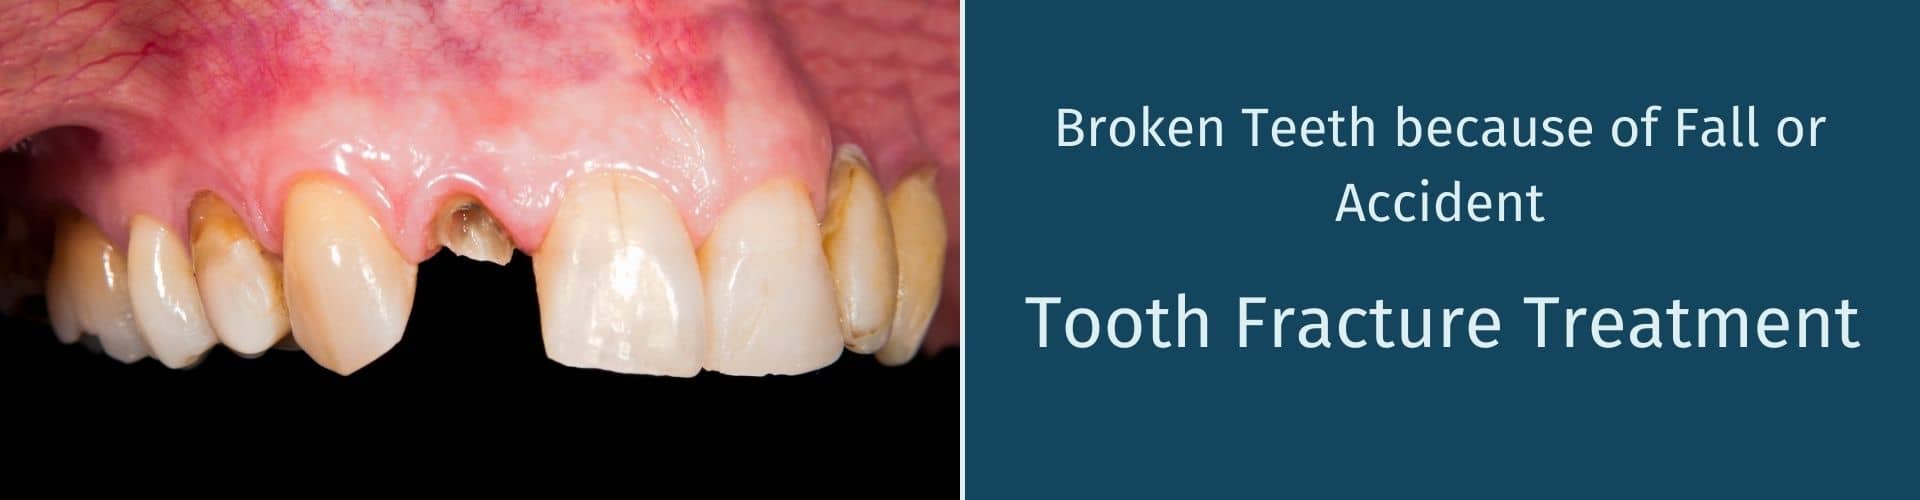 Tooth Fracture Treatment Delhi